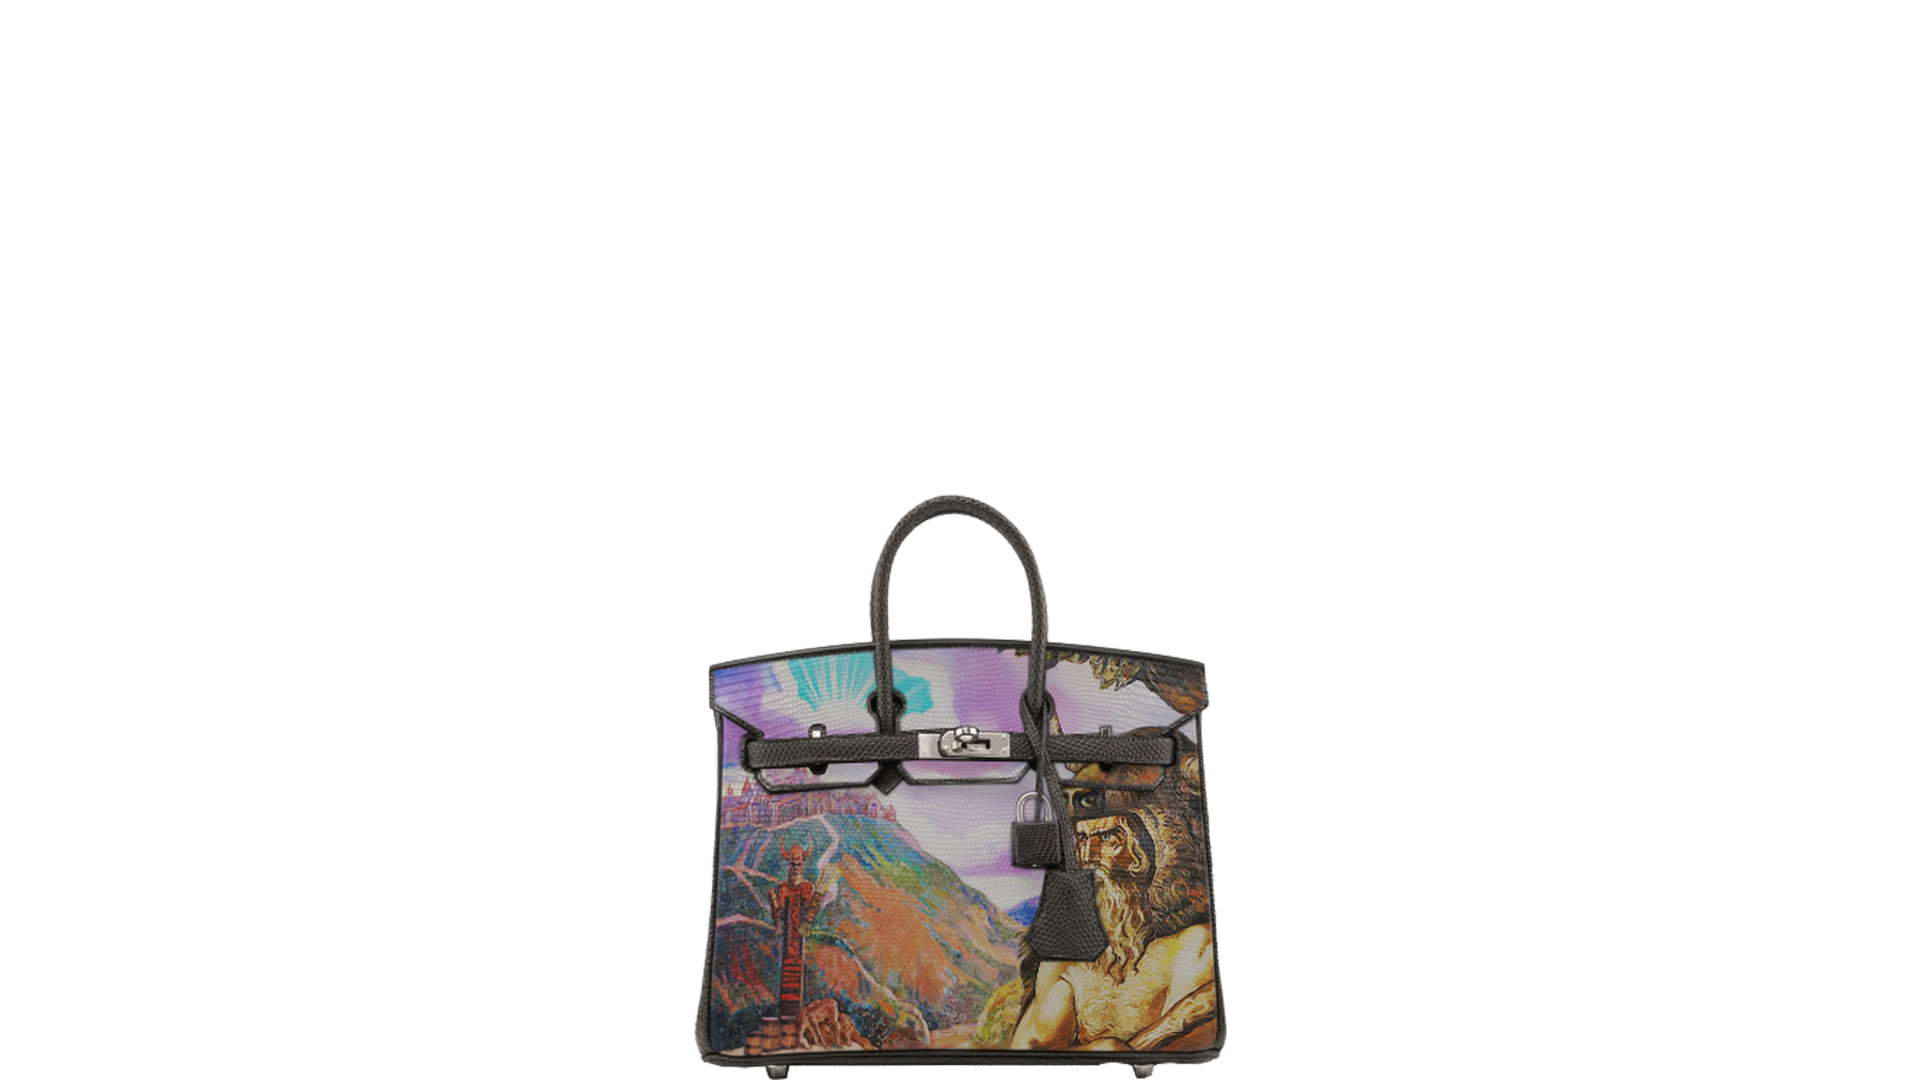 Hand painted Hermès Birkin Bag Jean Dubuffet Propitious Moment, by  ARTBURO.ART VLOG.GALLERY